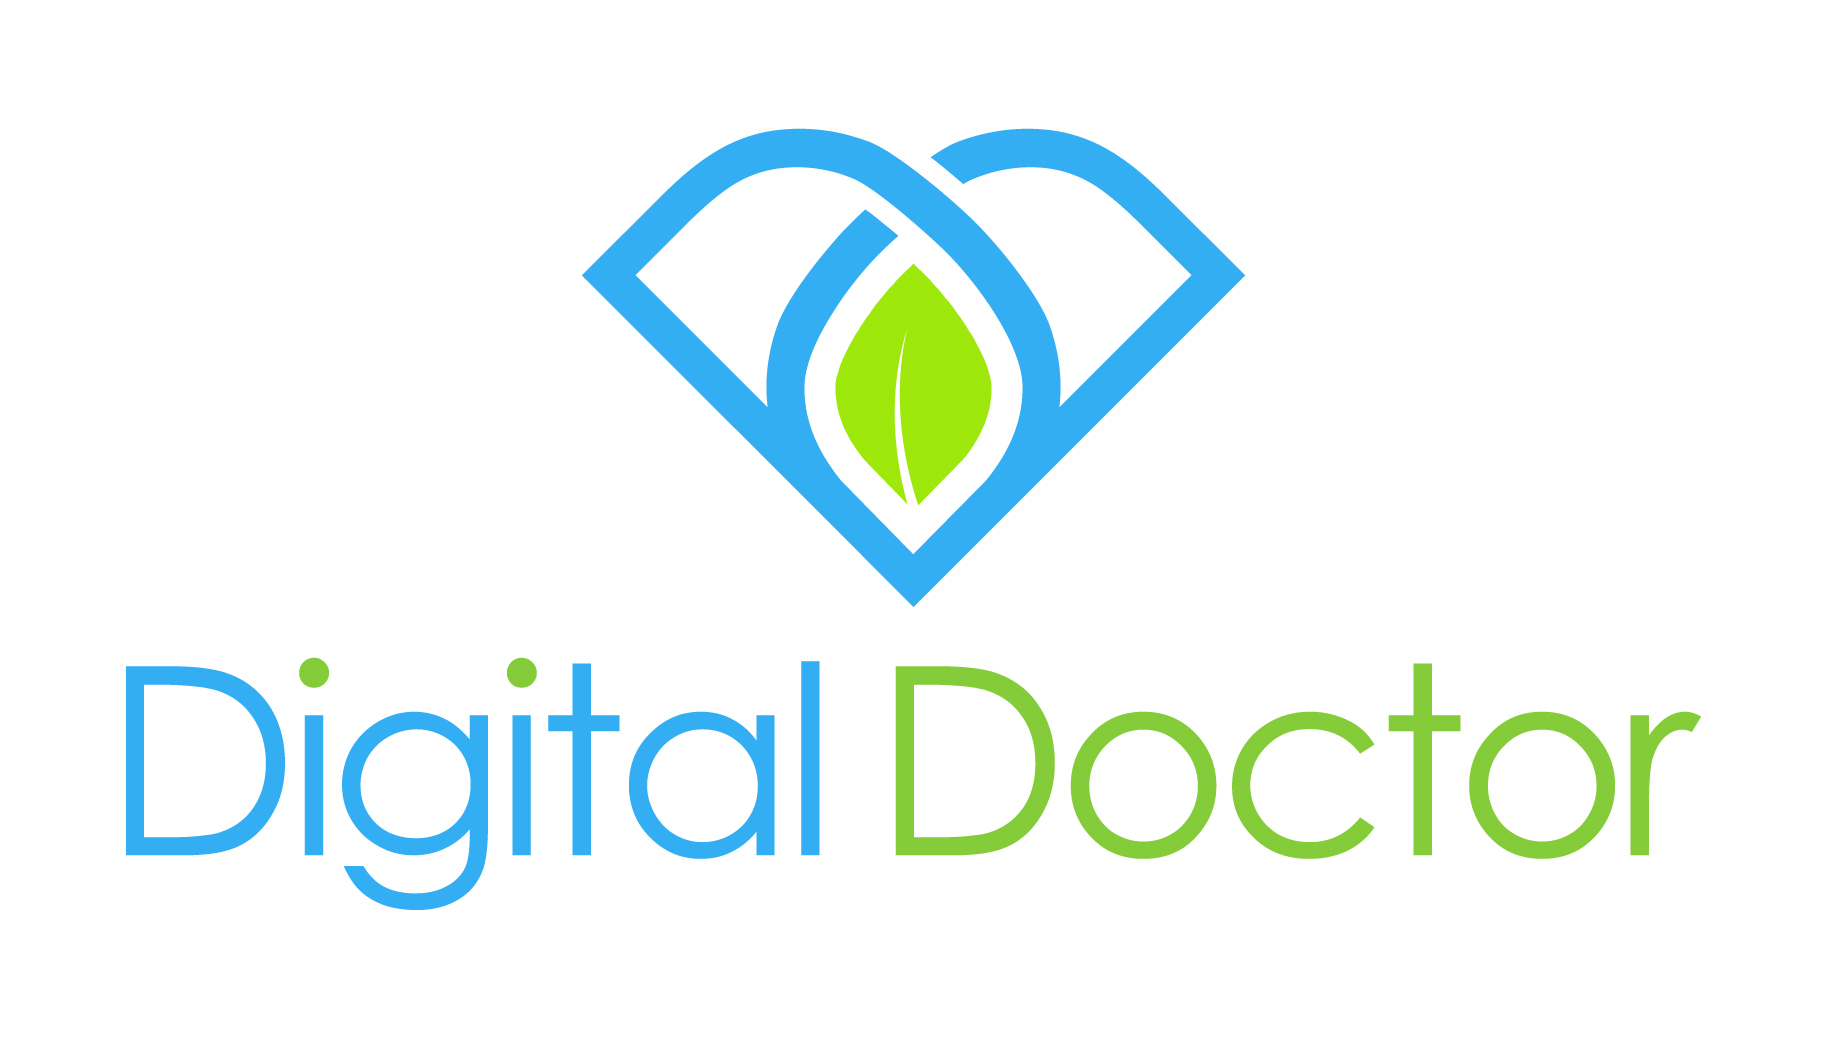 Digital Doctor logo_jpg.jpg